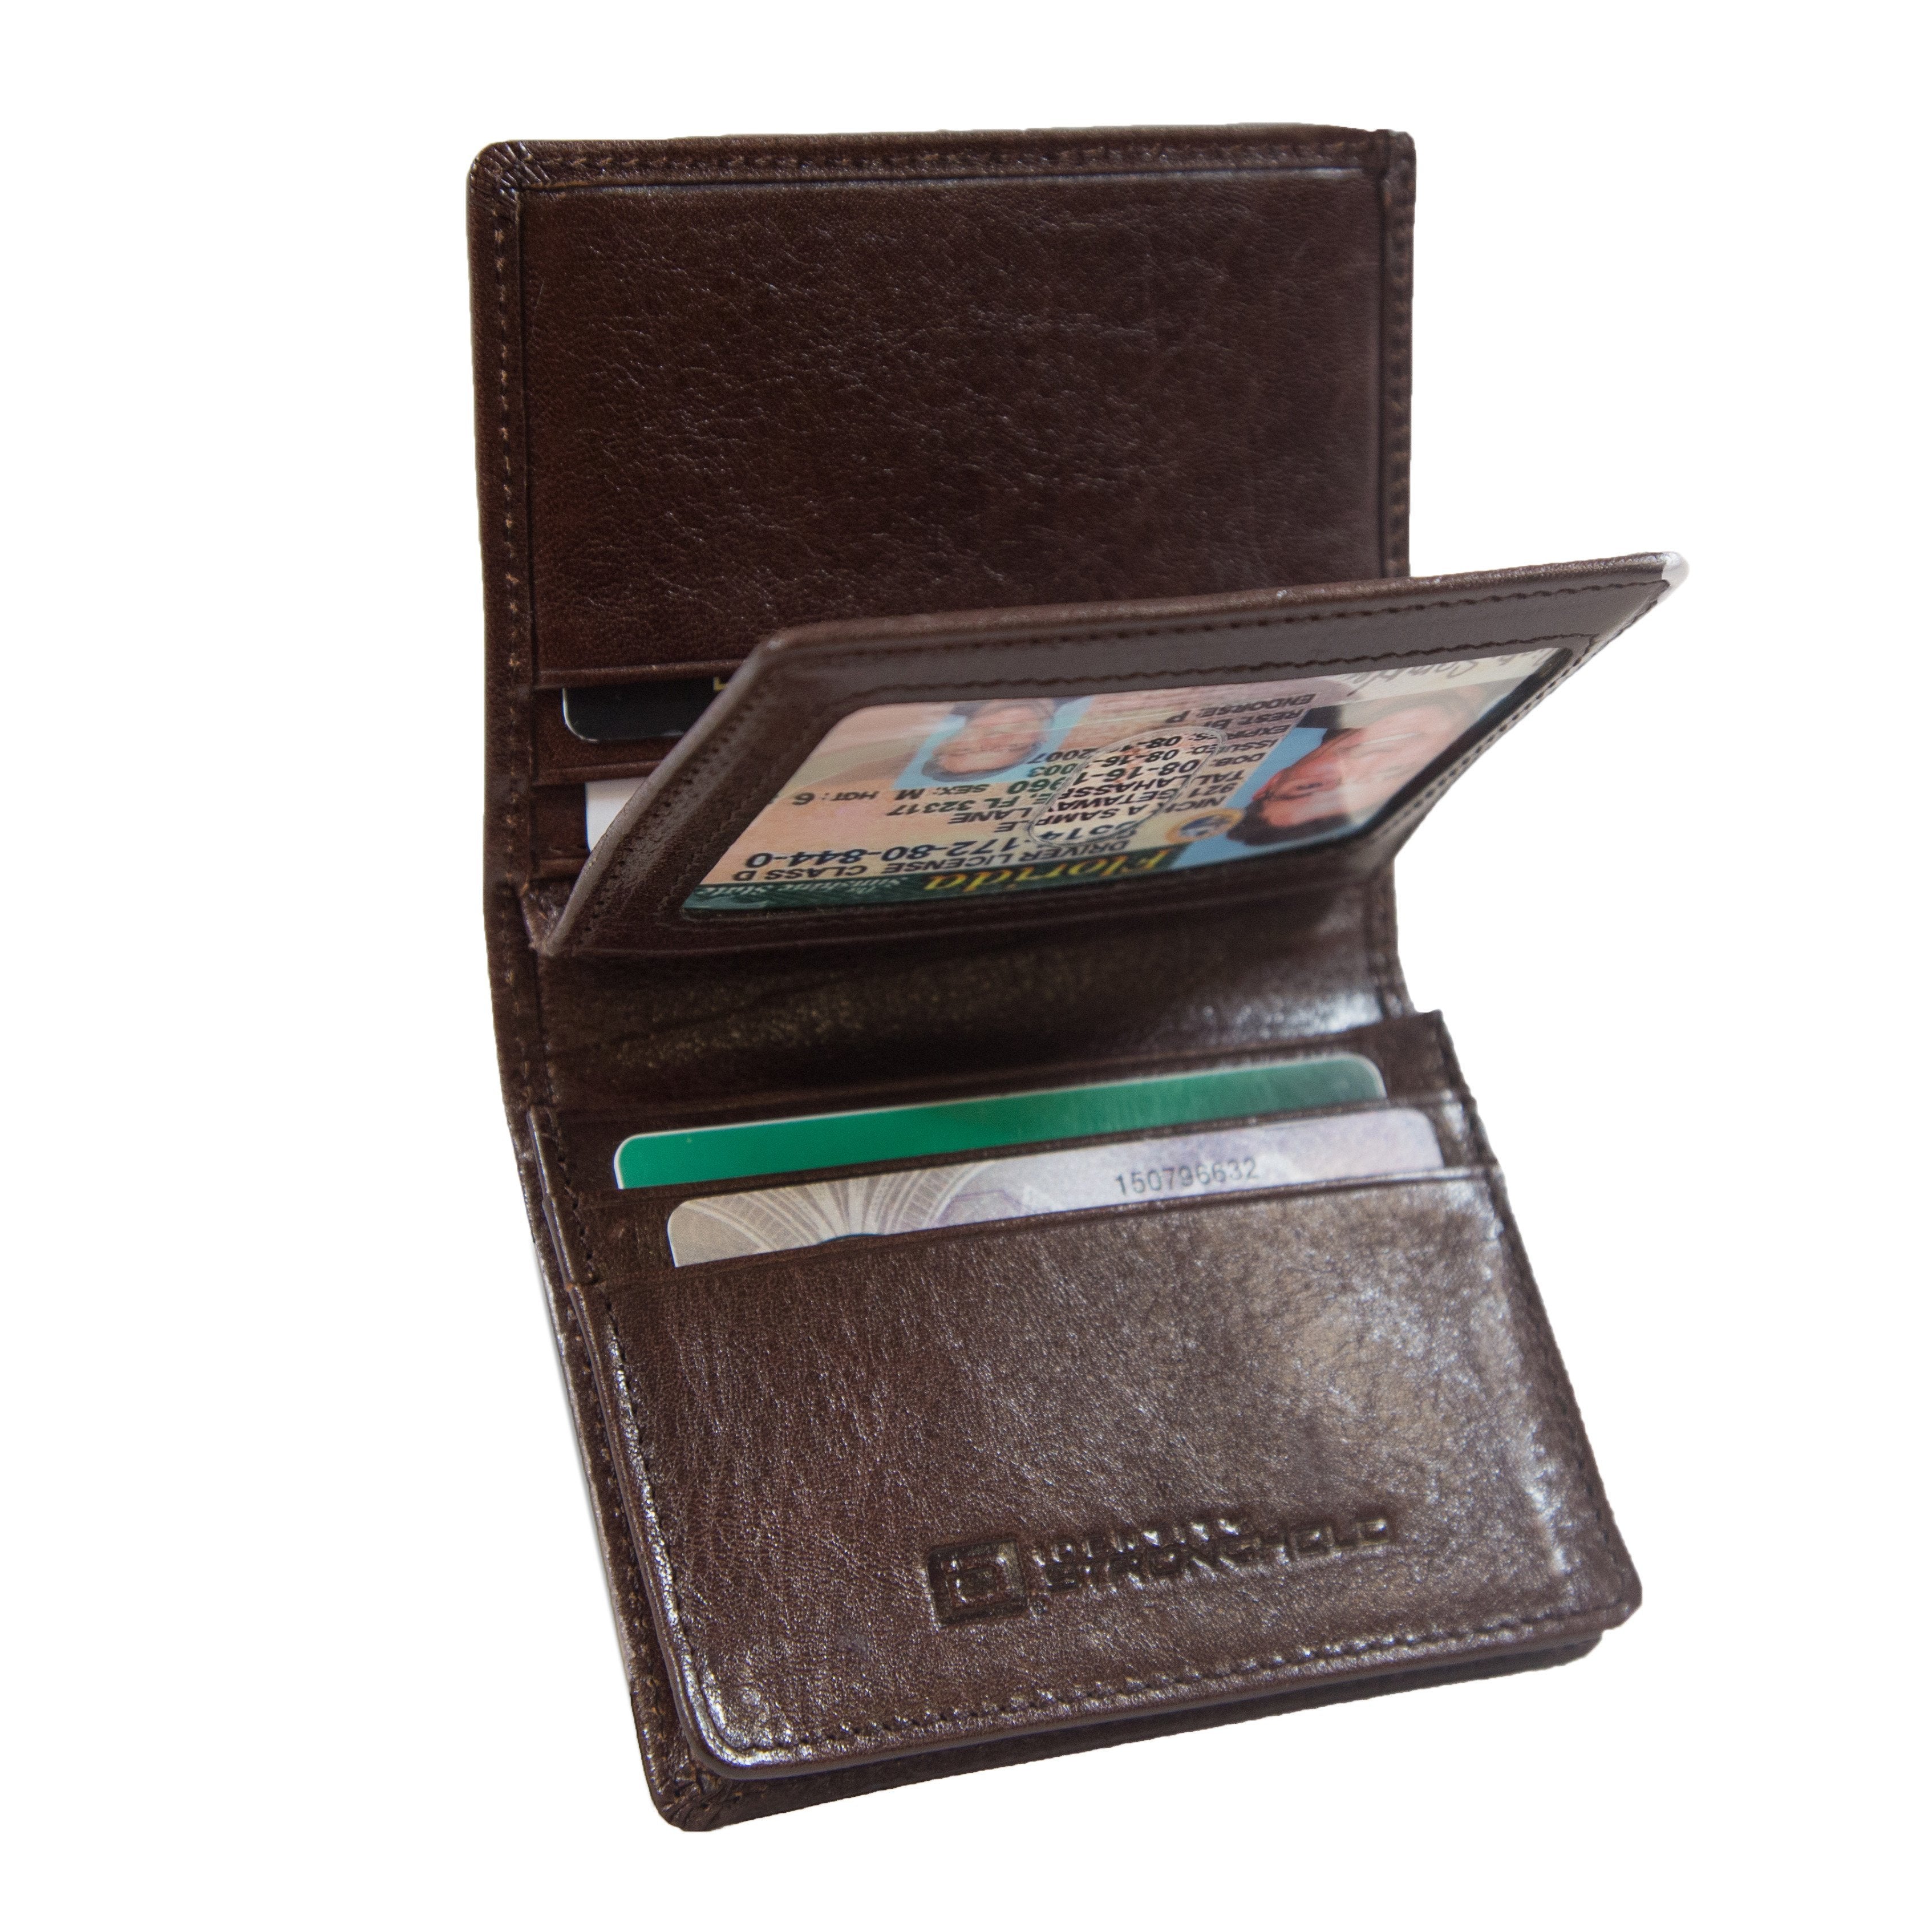 Genuine Leather Men Wallets Anti Theft Wallet Rfid Card Holder